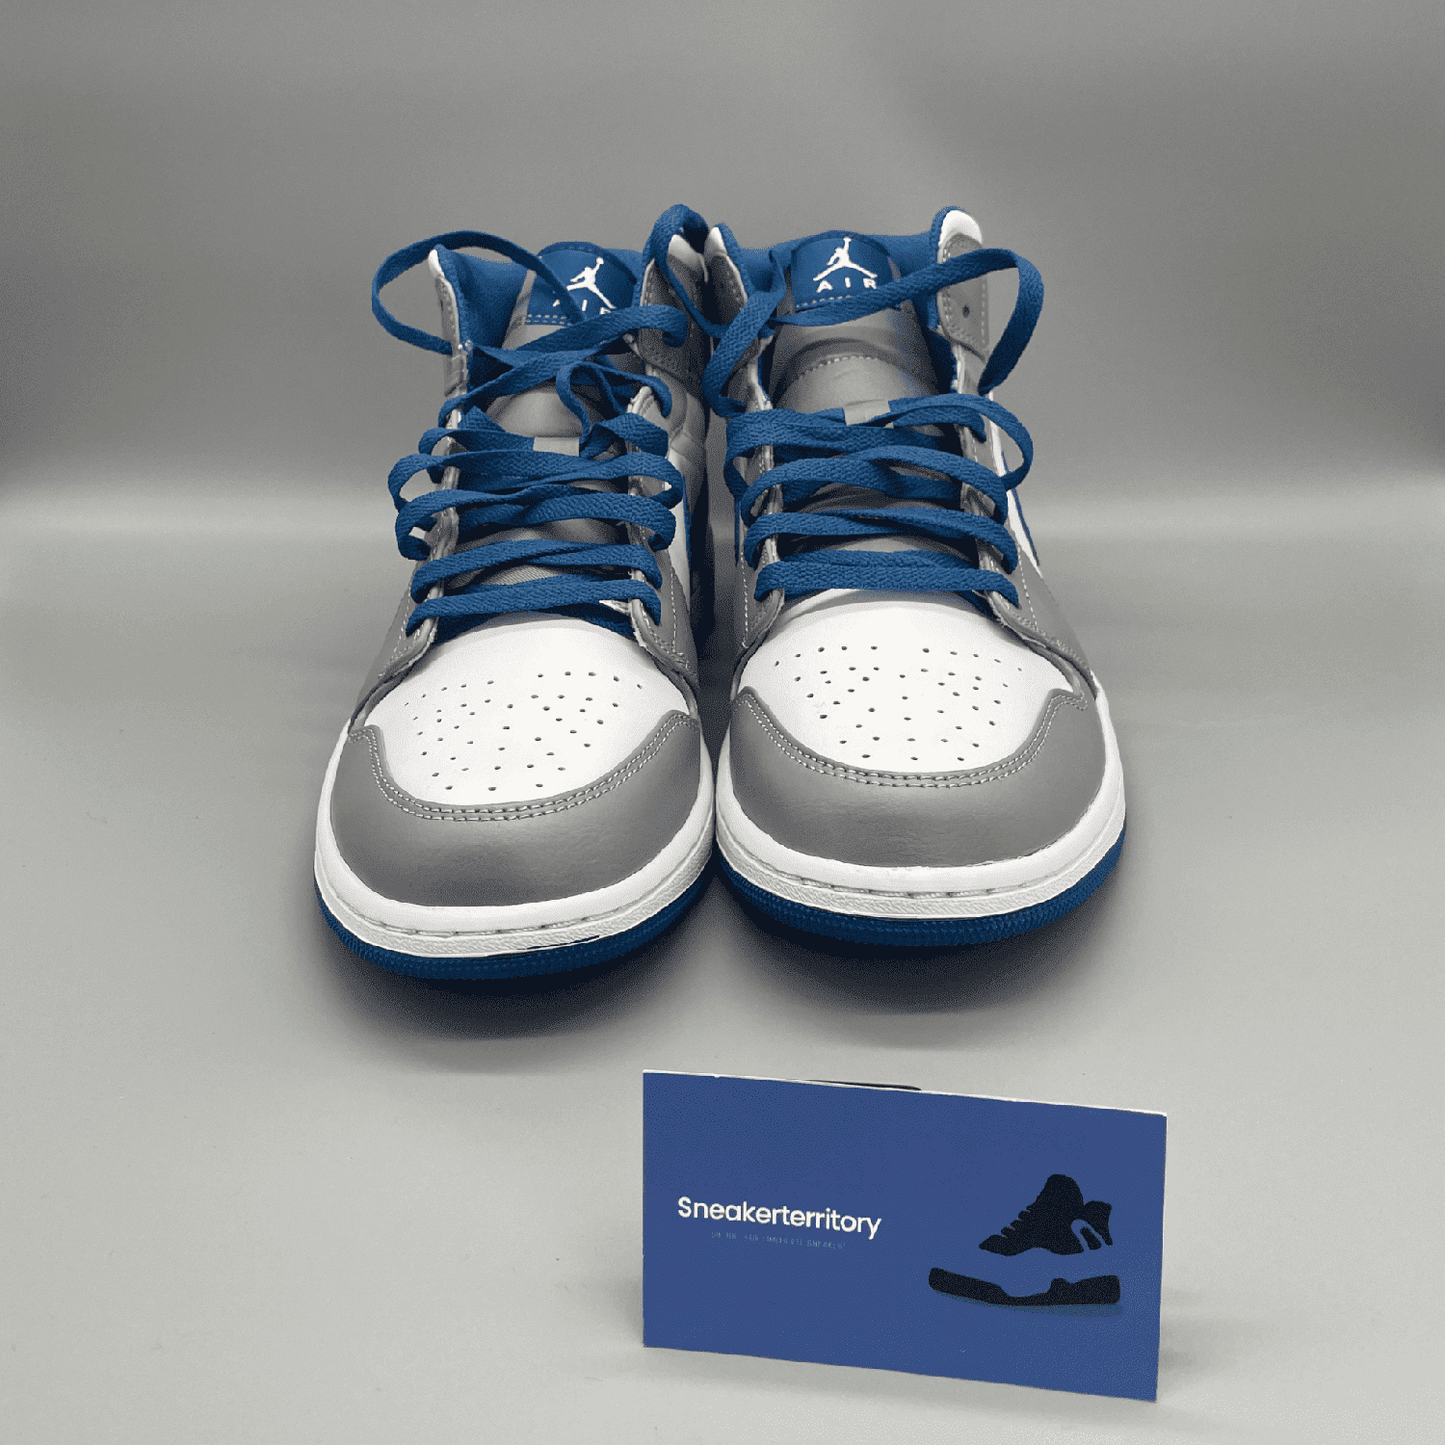 Air Jordan 1 Mid True Blue - Sneakerterritory; Sneaker Territory